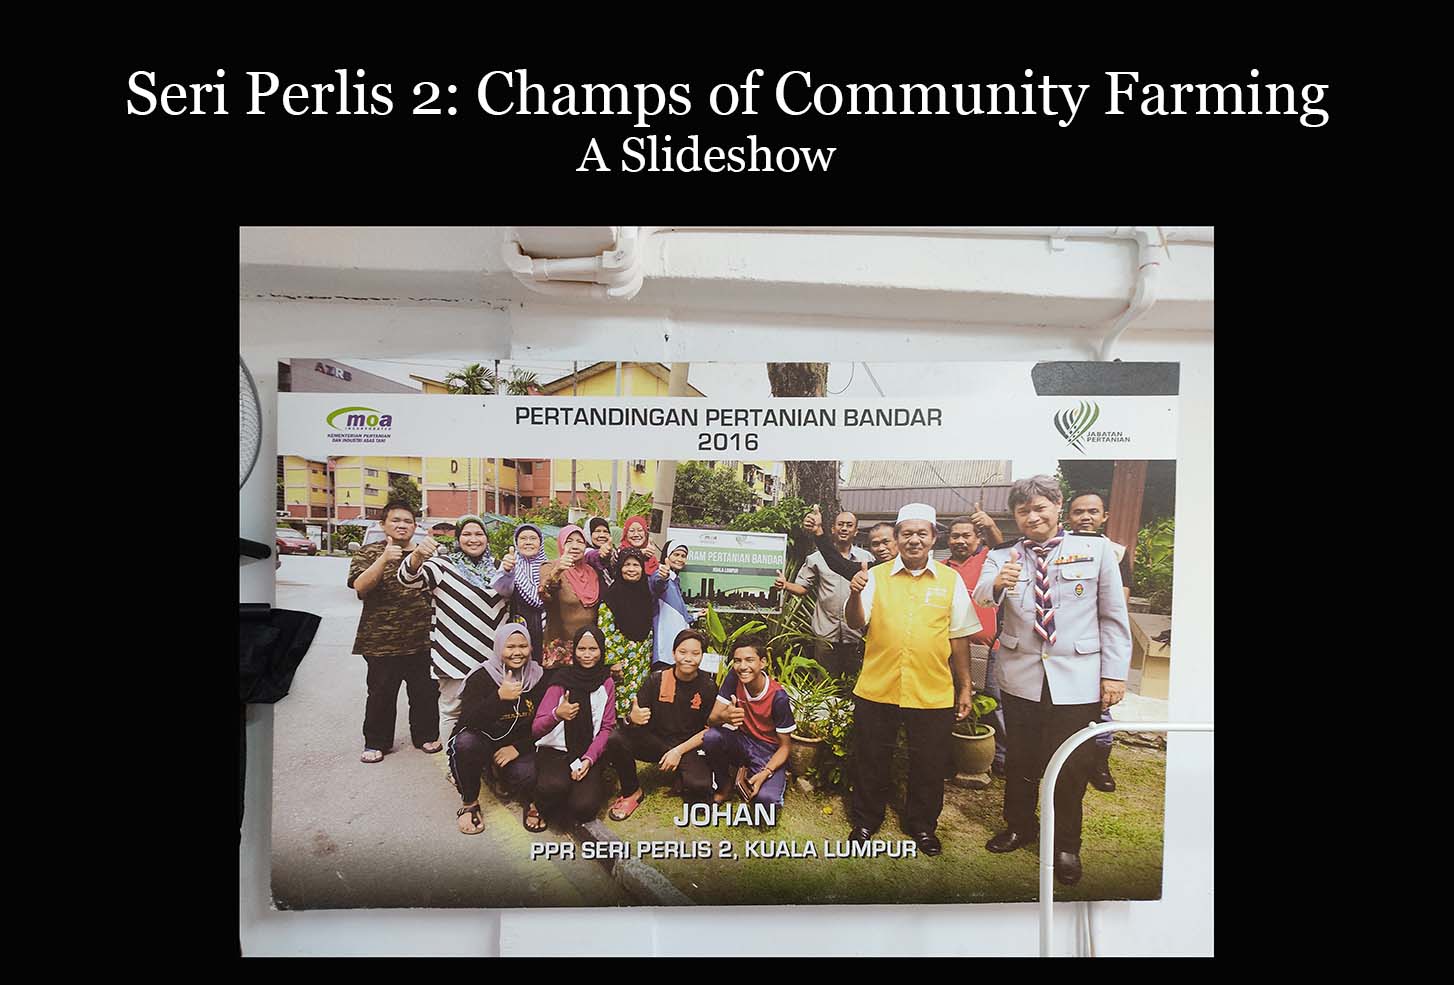 An award for community farming is framed in the Seri Perlis 2 PPR. (Tan Kai Ren)